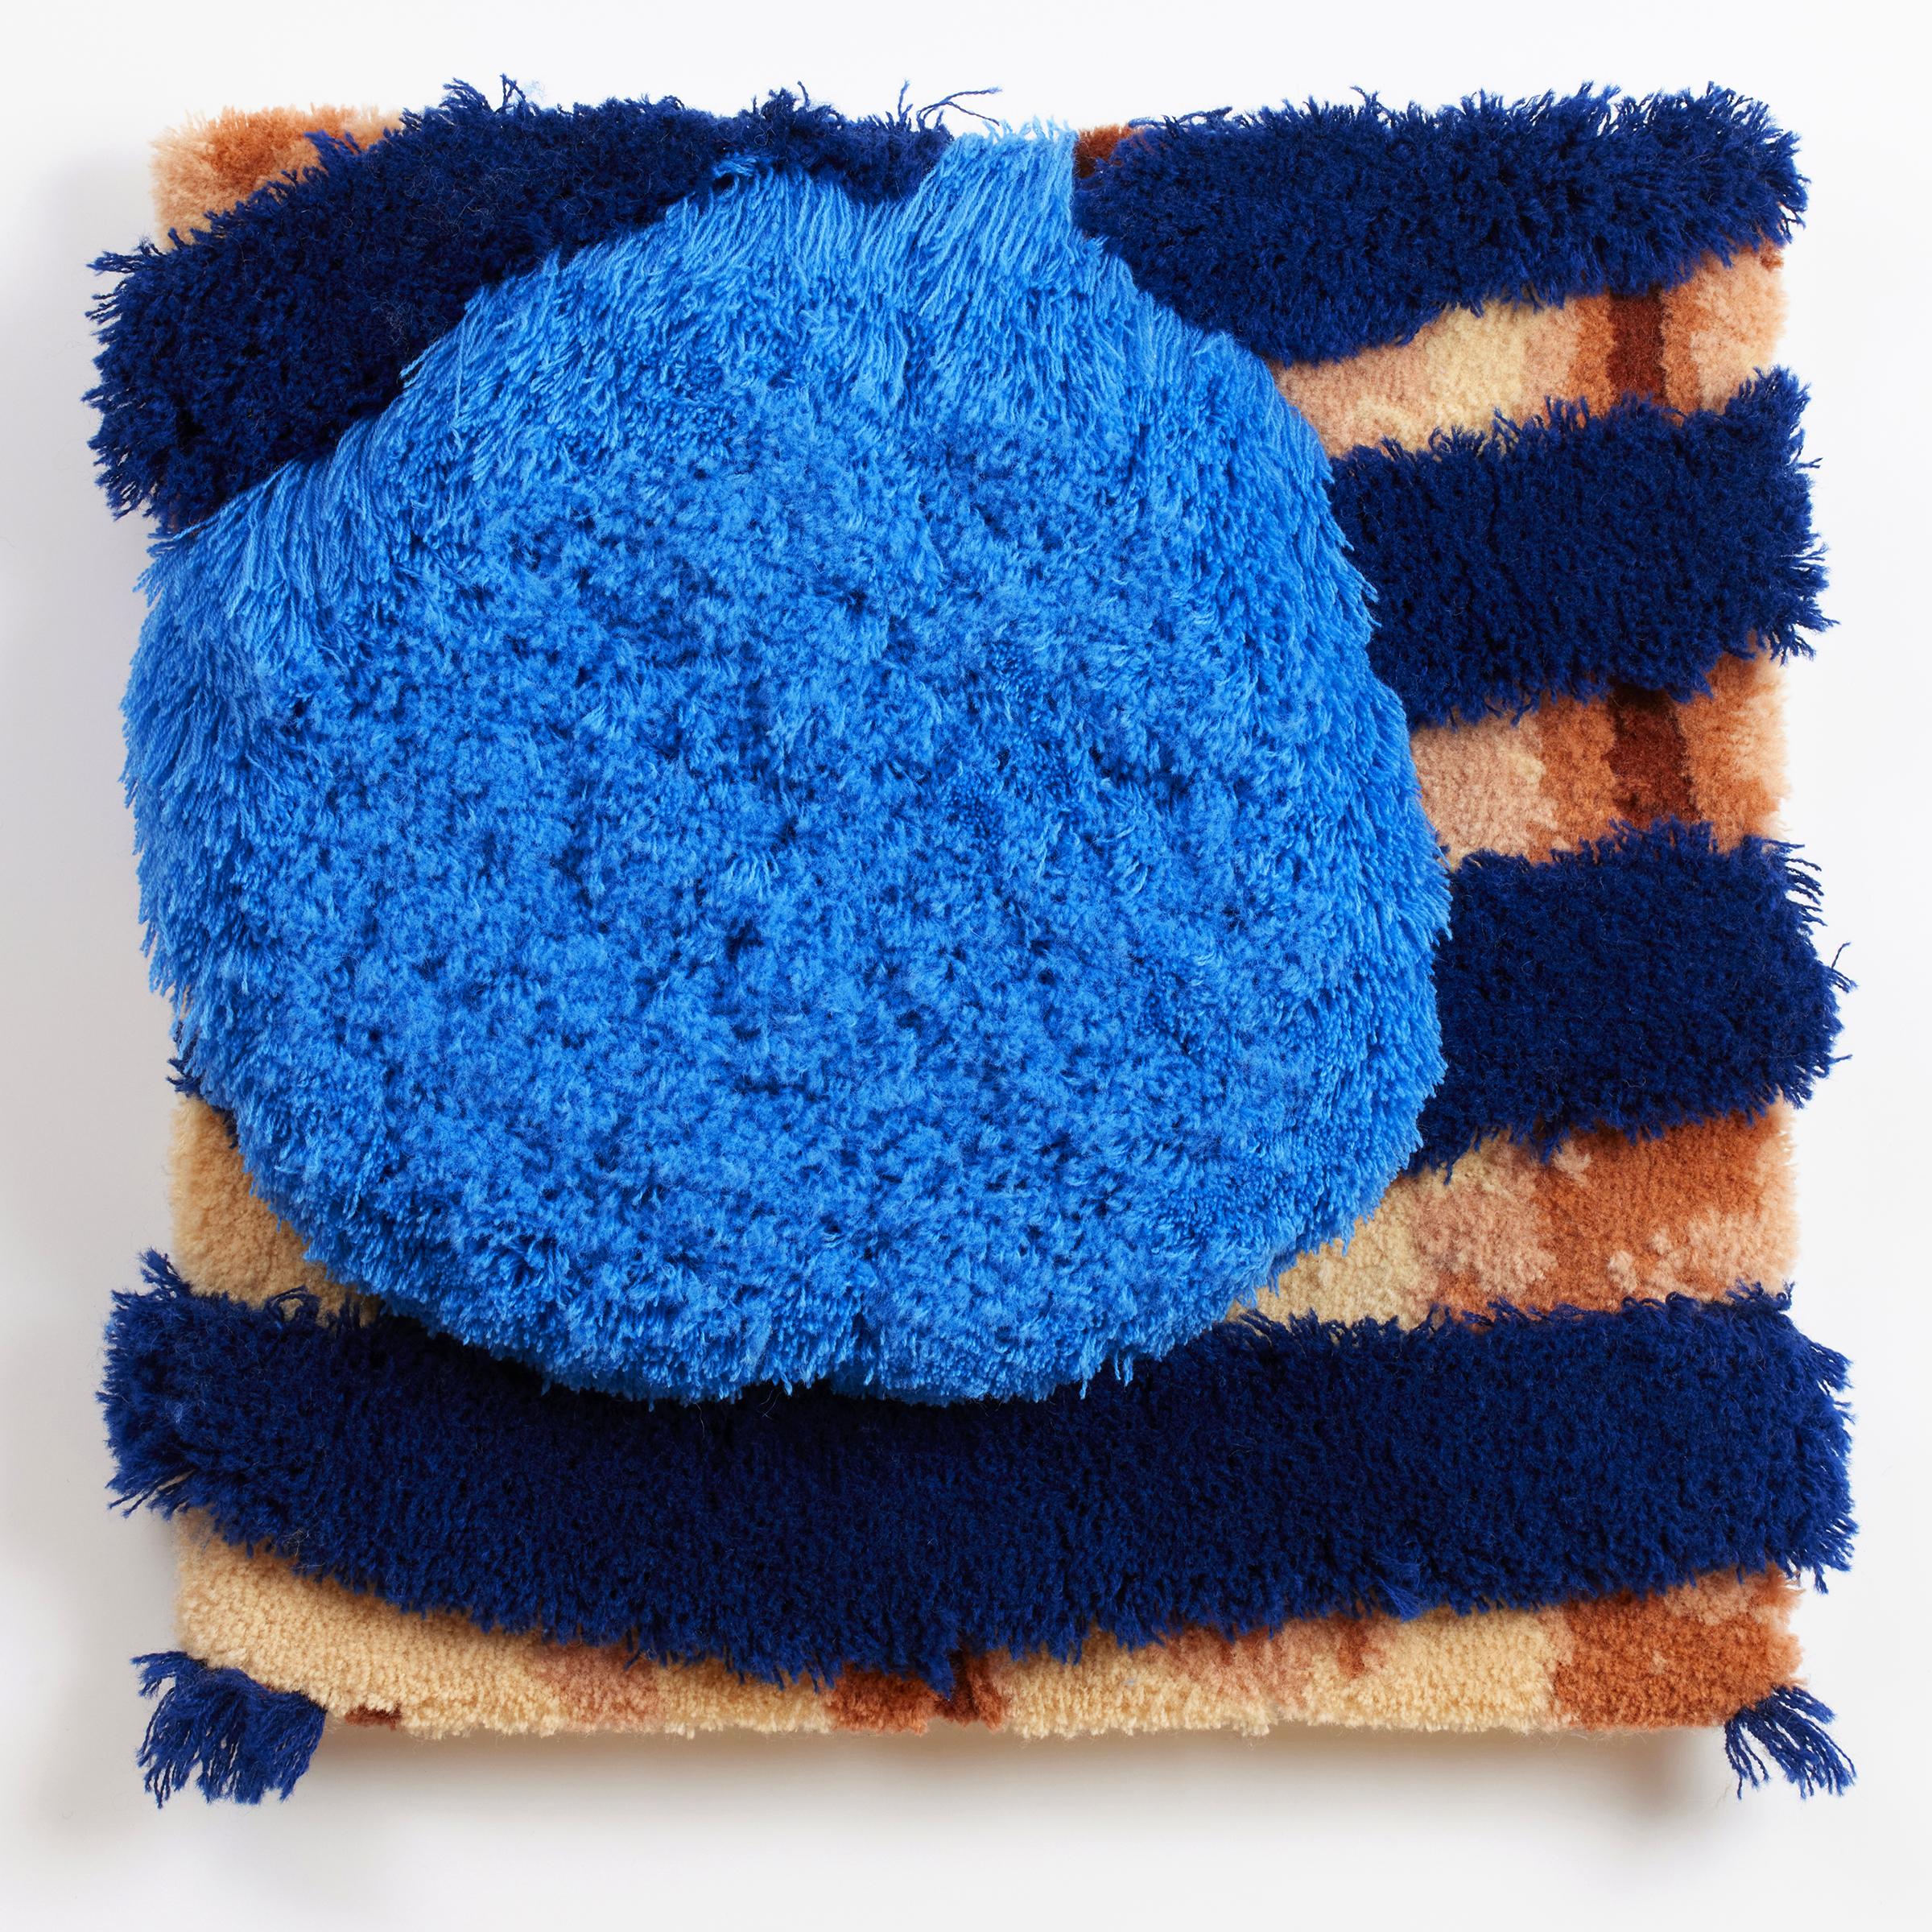 'Blue Boy' - contemporary fiber art, texture, pattern, stripes, tuft - Abstract Sculpture by Trish Andersen